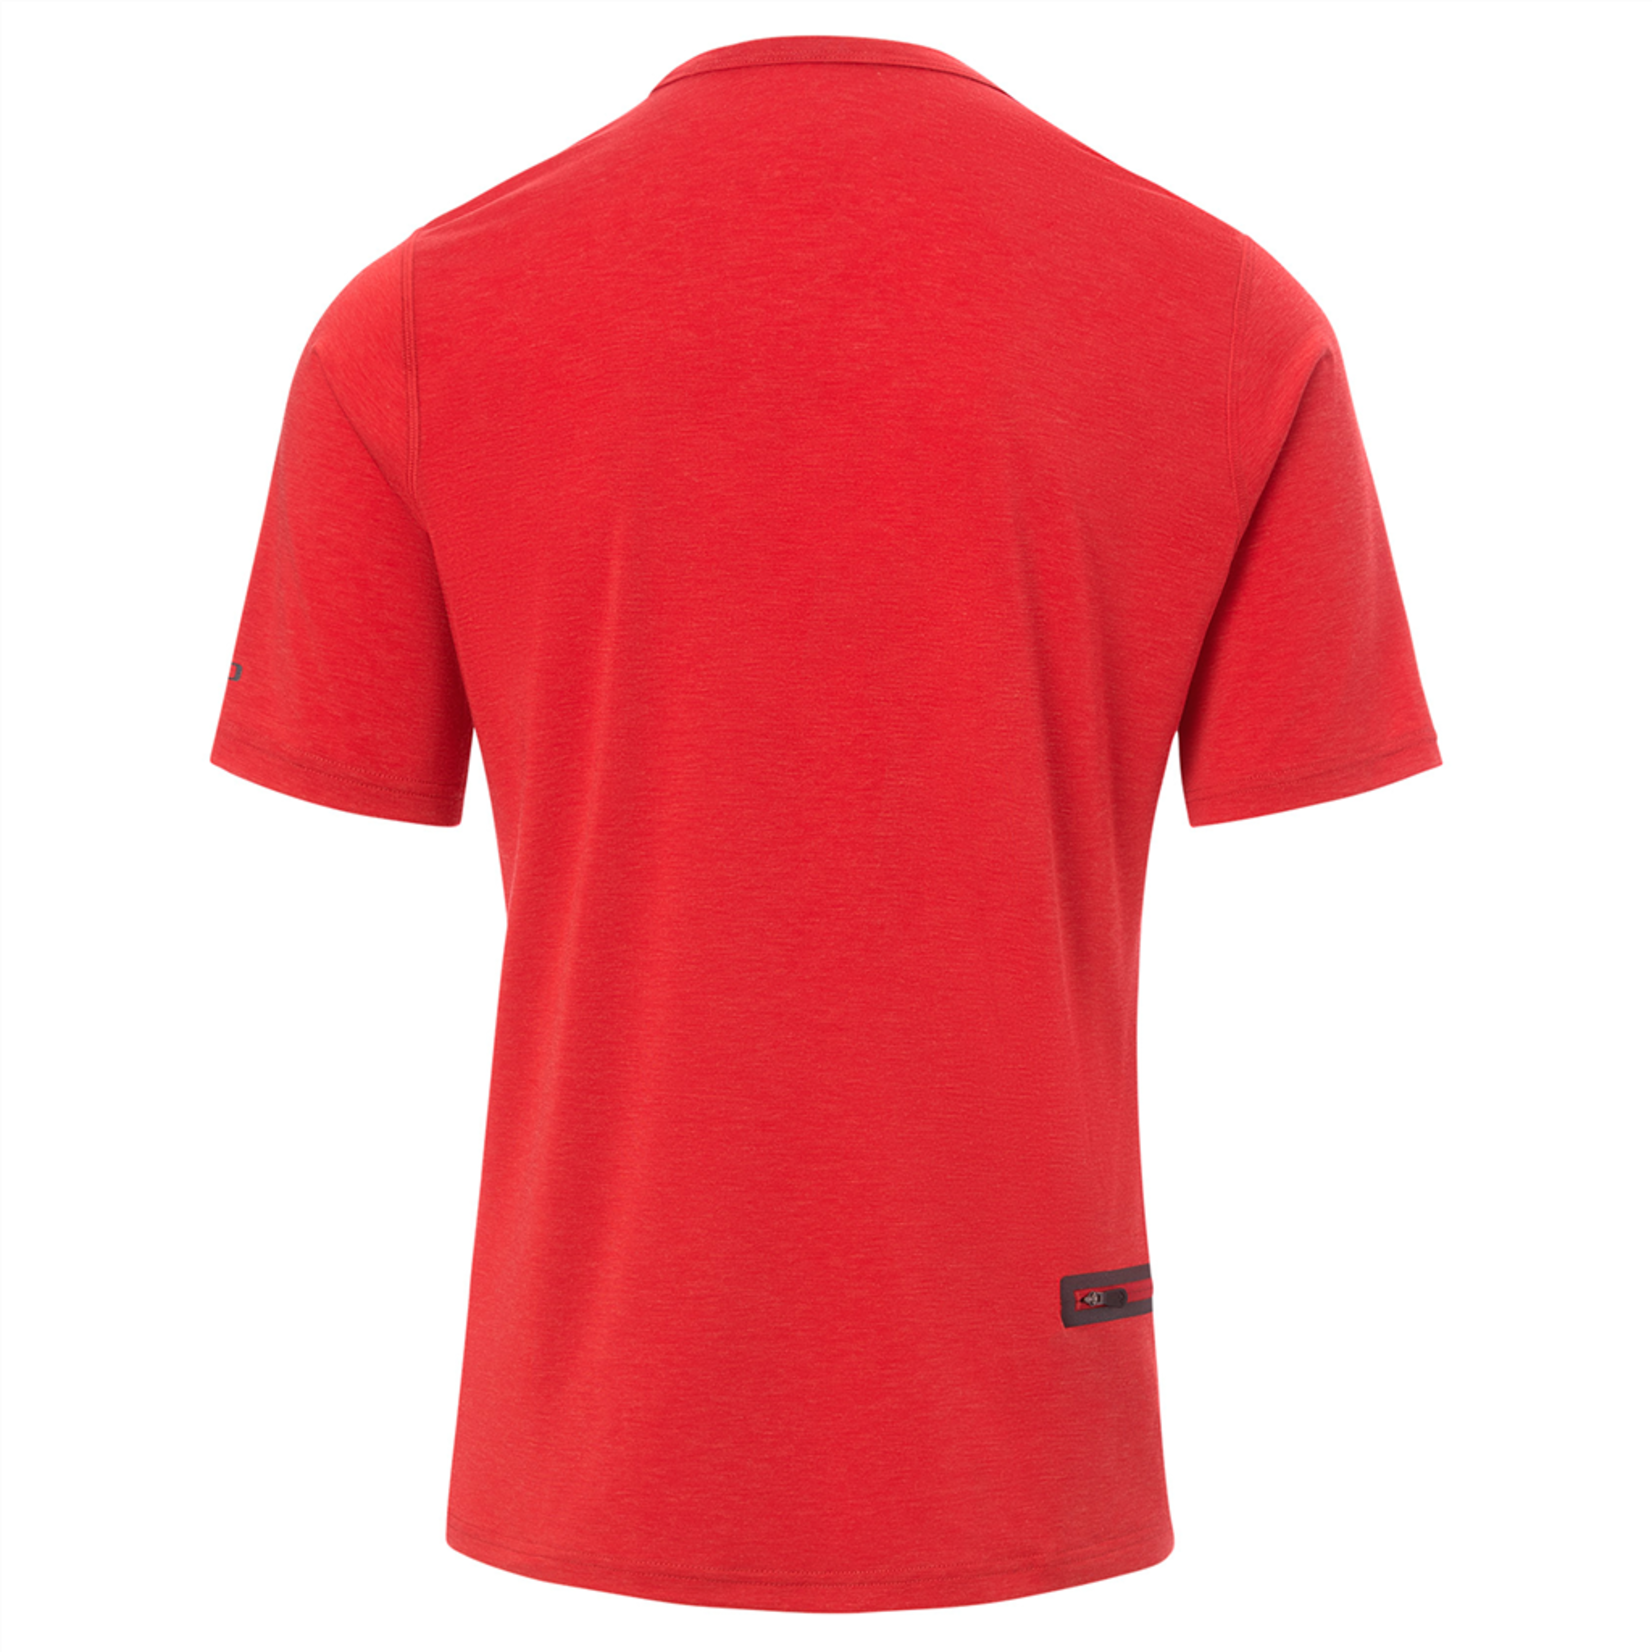 Giro Cycling T-Shirt Venture Roust Jersey - Ginja red